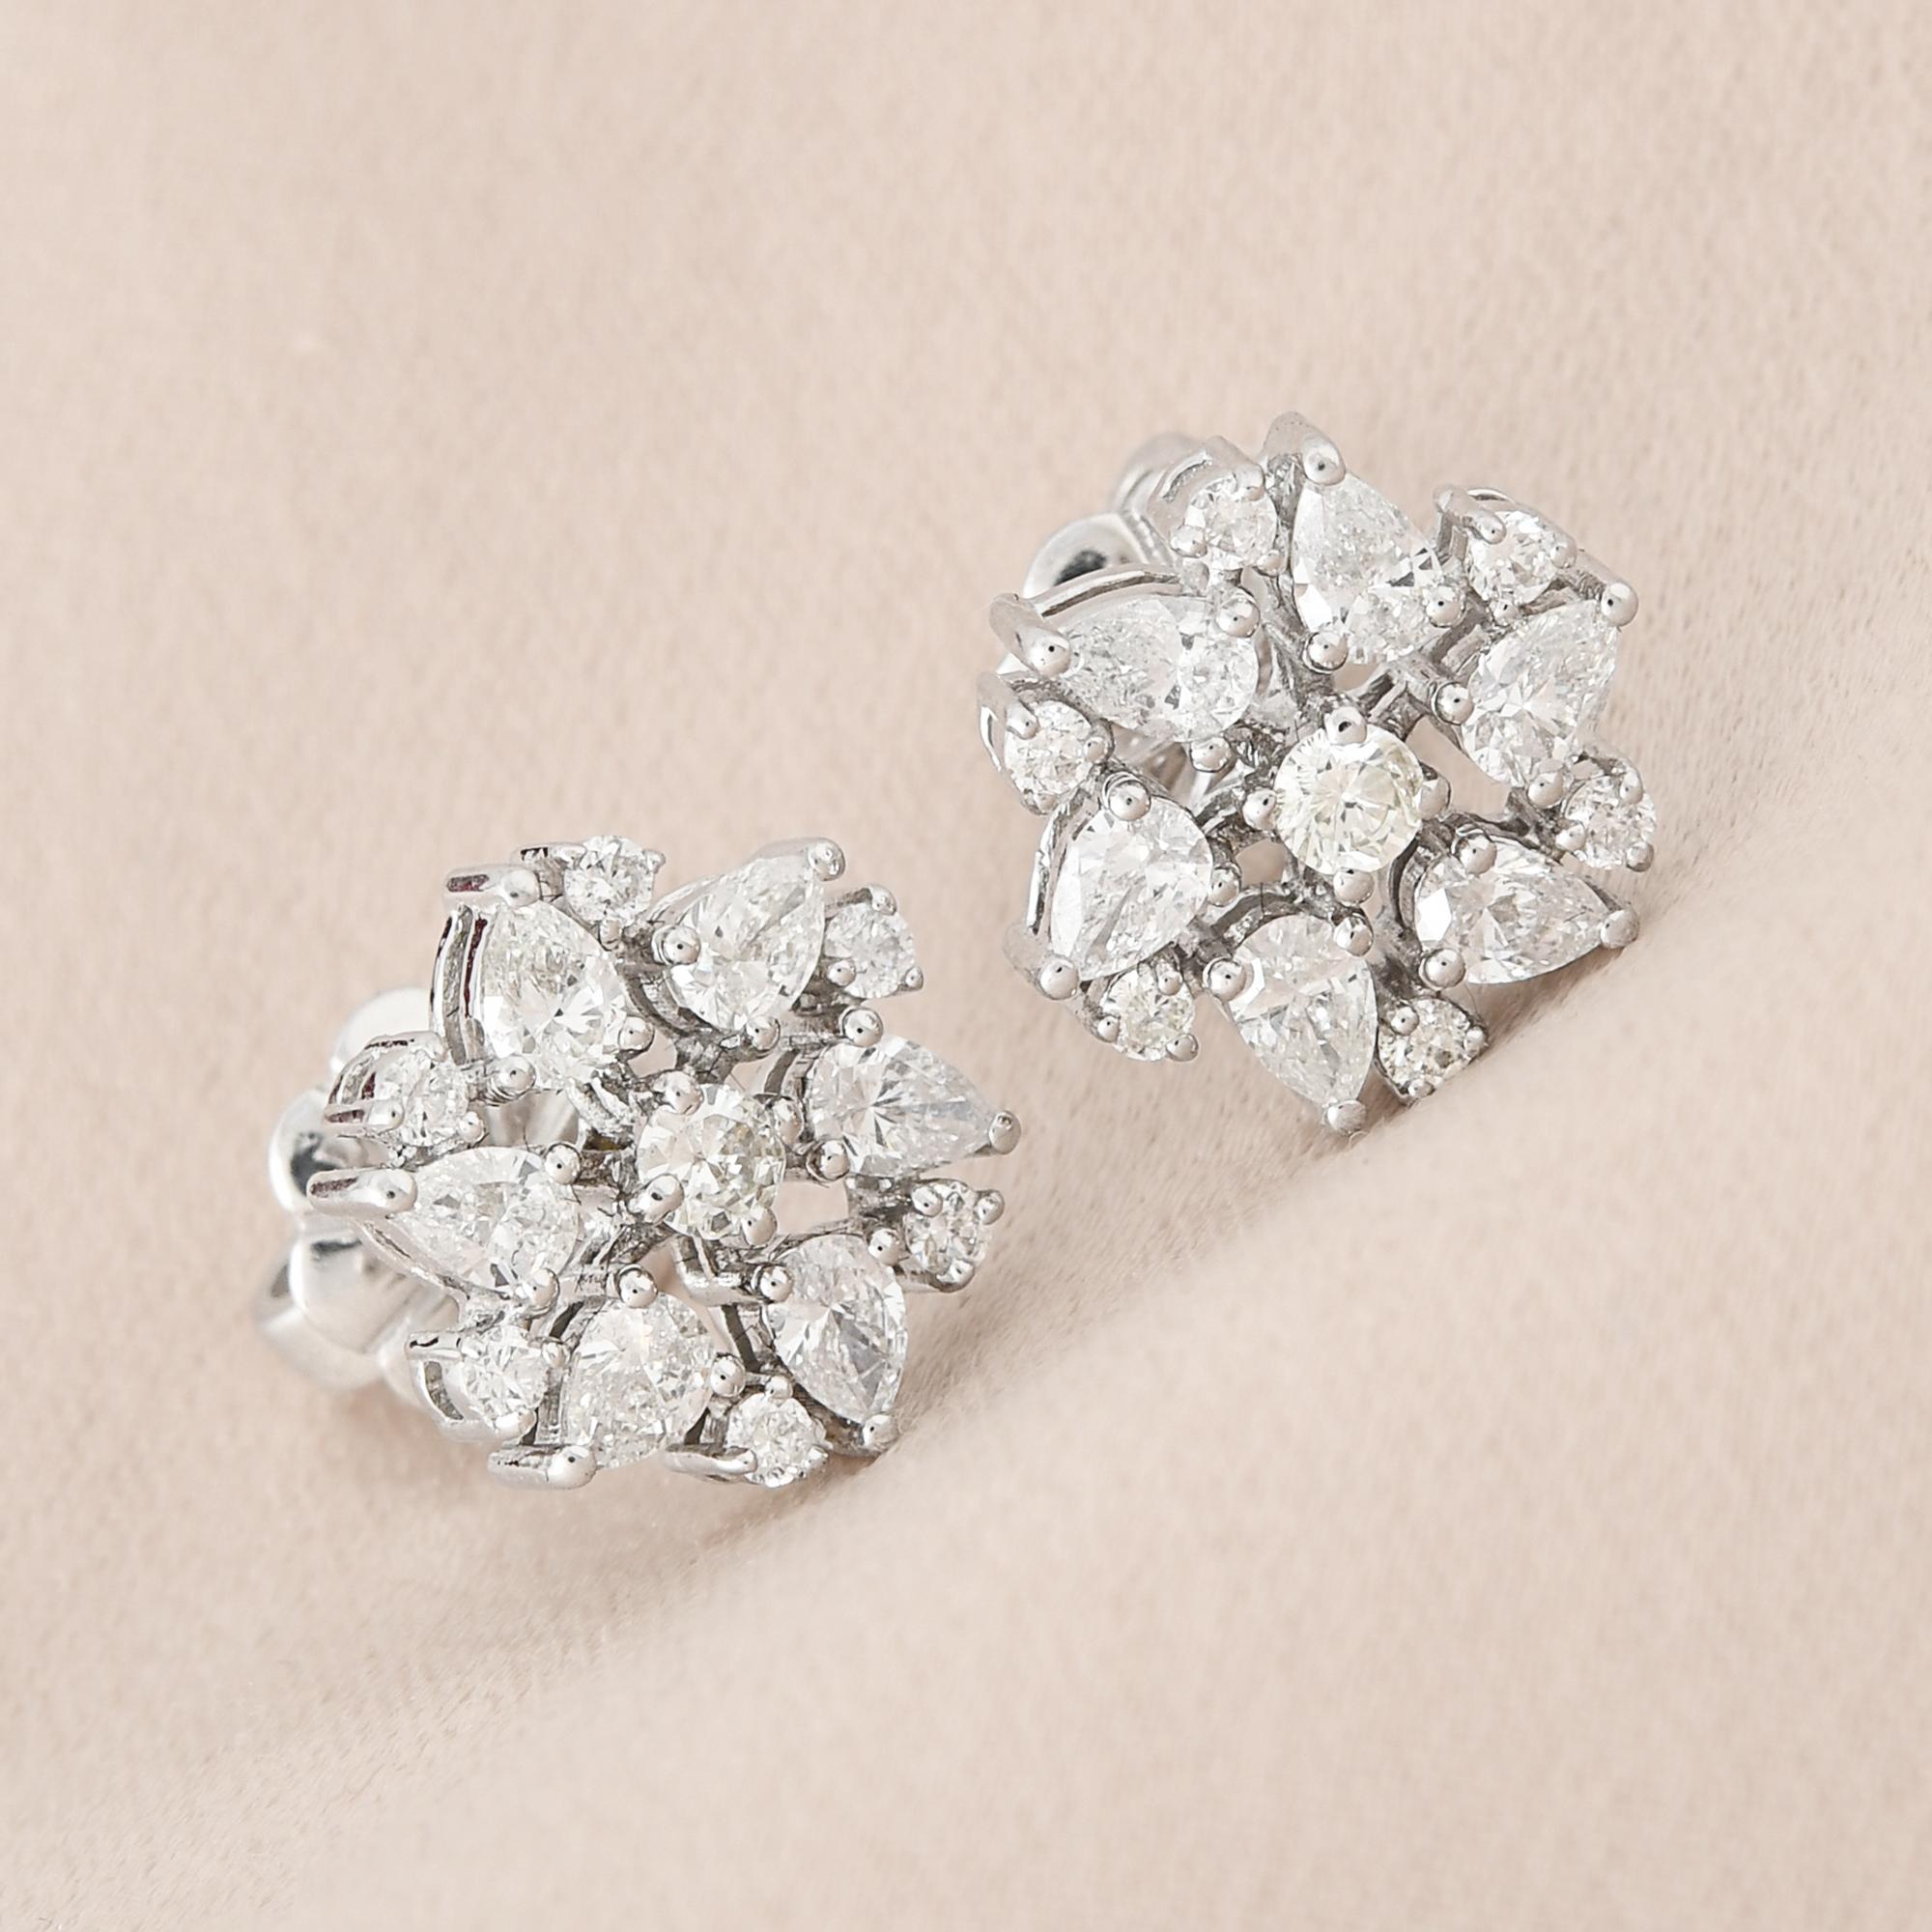 Pear Cut 0.96 Carat SI Clarity HI Color Pear Diamond Flower Stud Earrings 14k White Gold For Sale